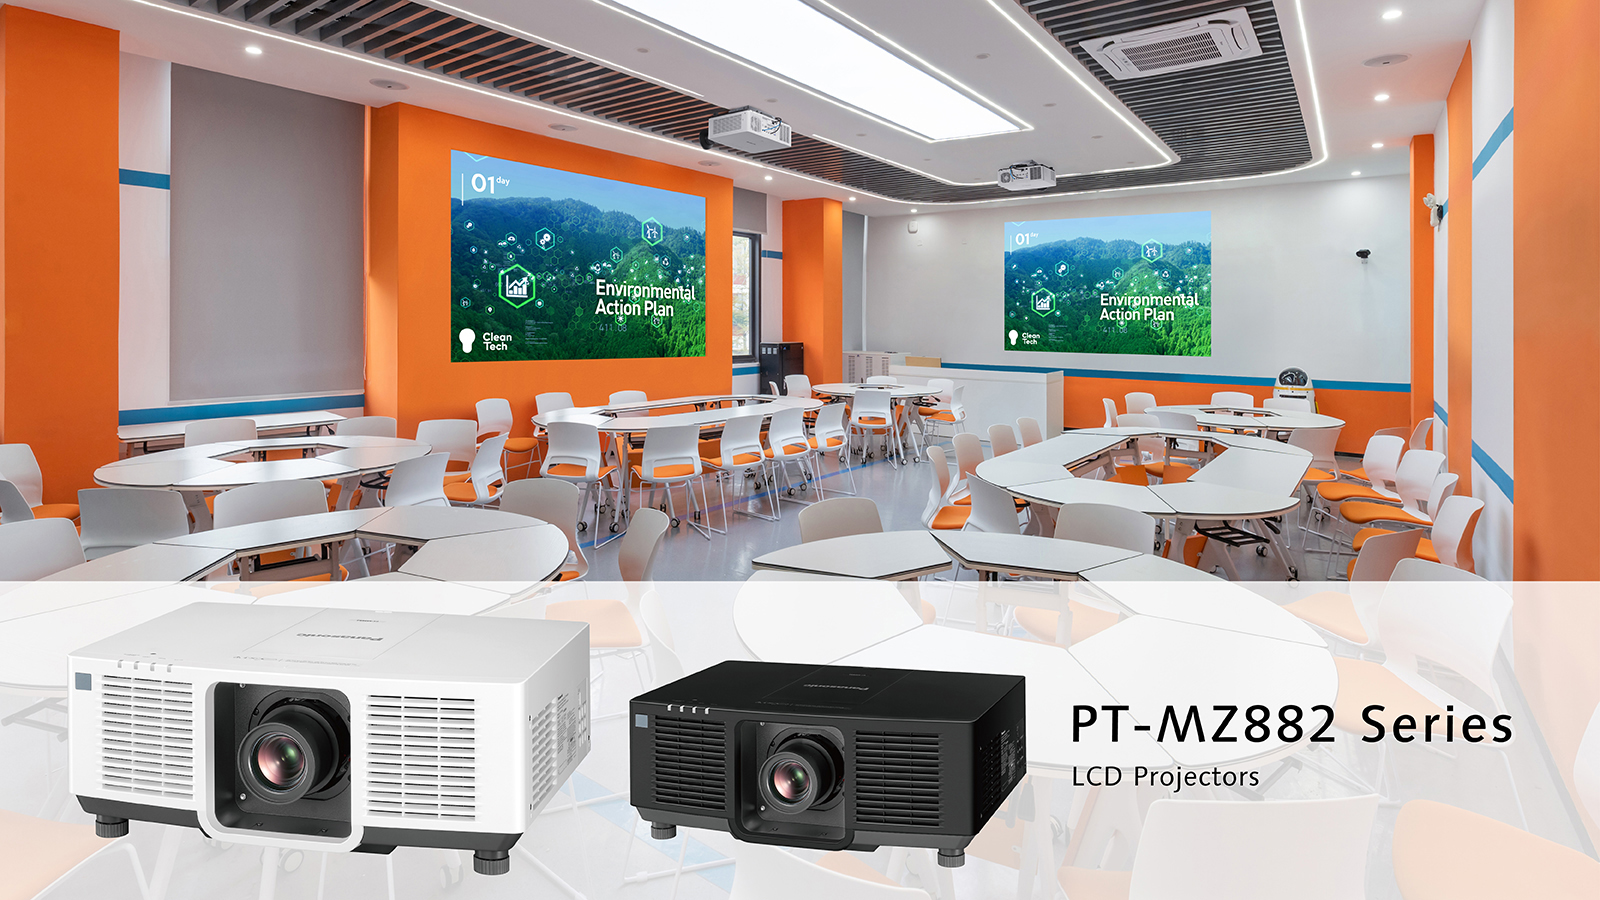 image: PT-MZ882 Series LCD Projectors